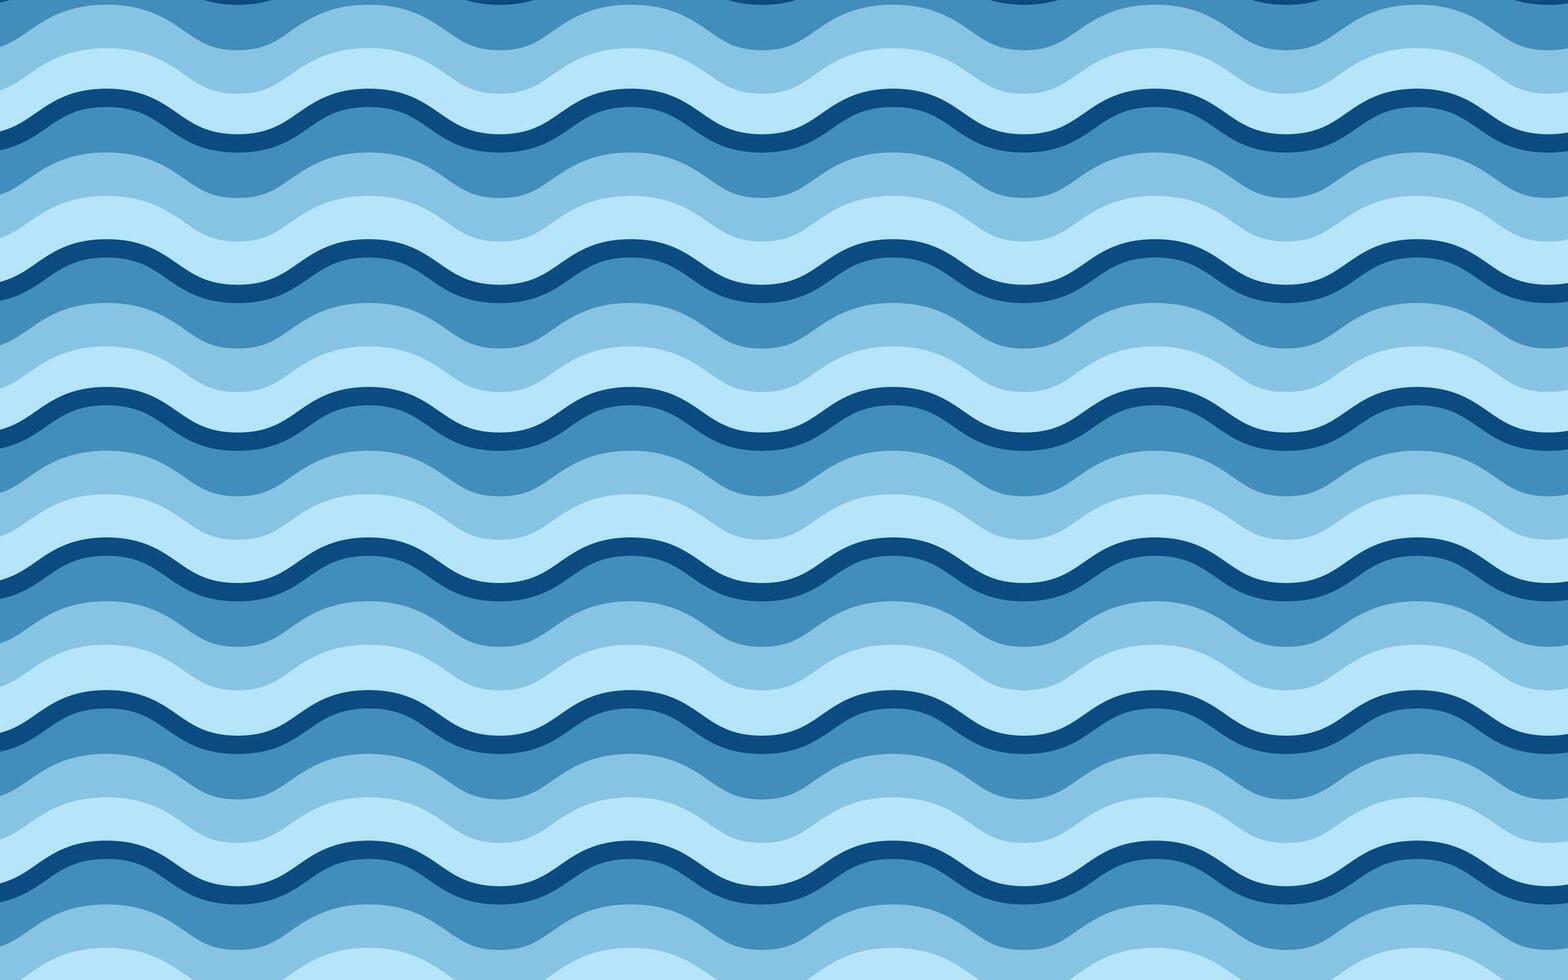 Wave pattern. Vector illustration.